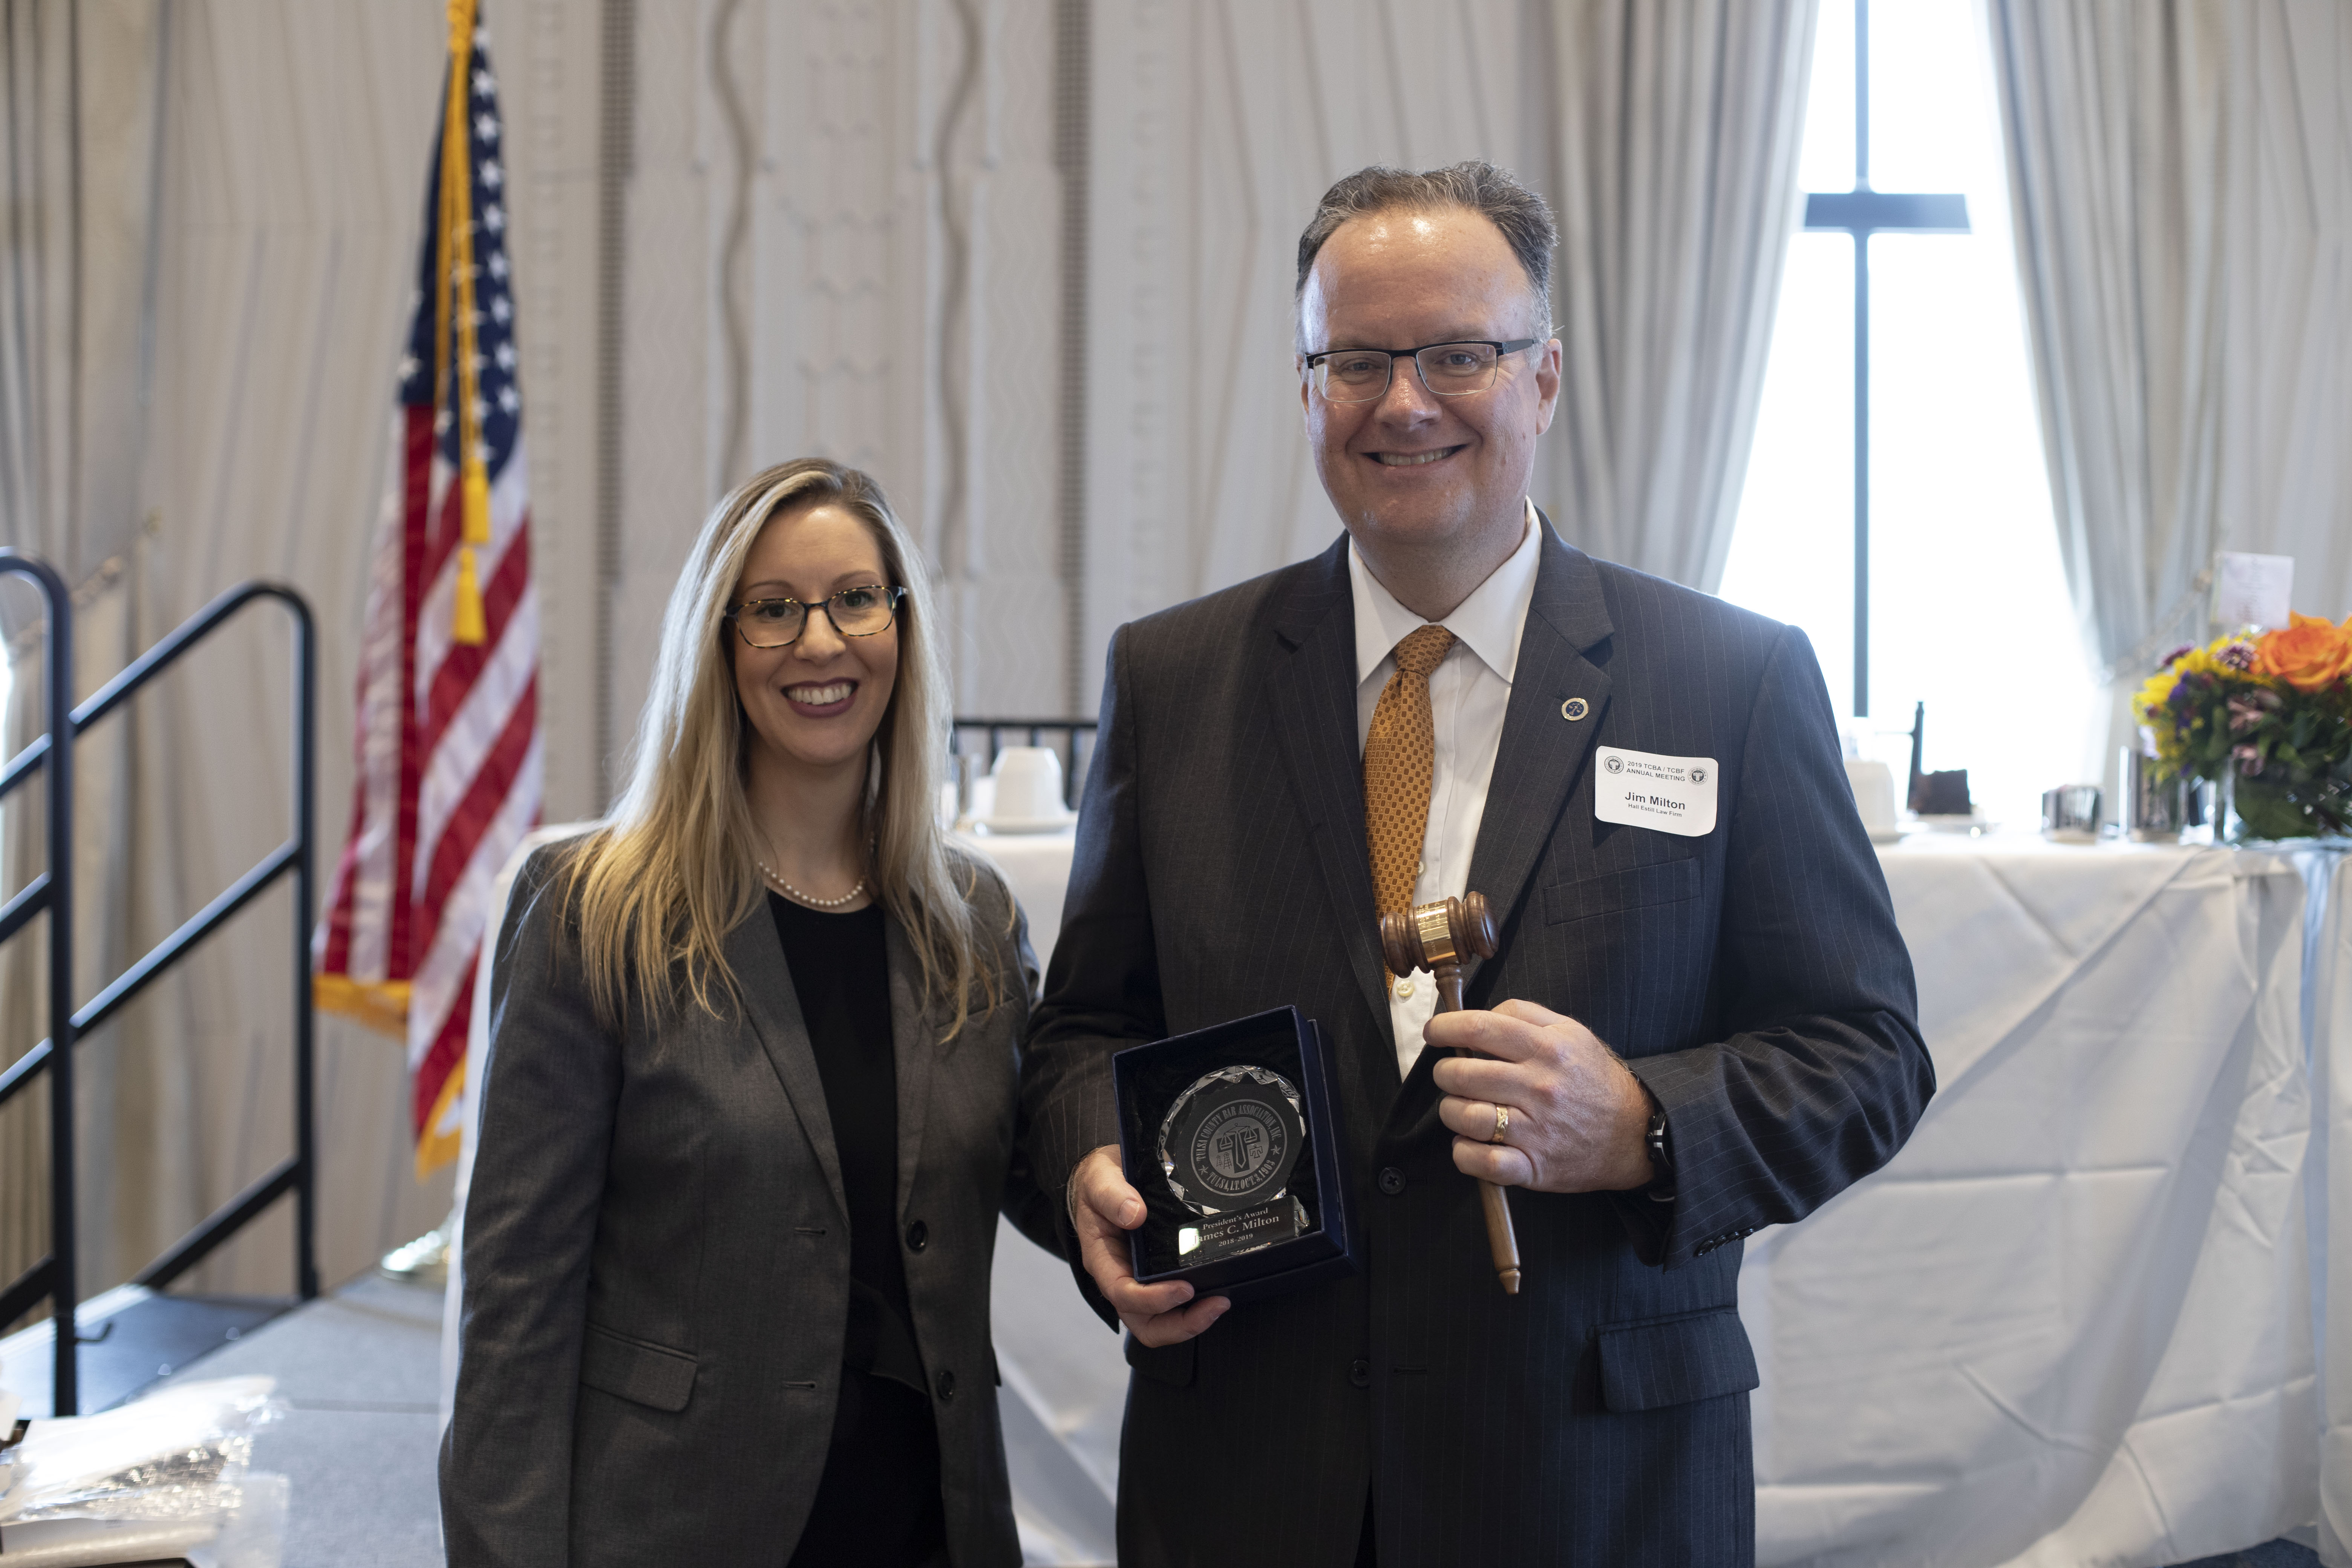 Jim Milton recipient of the TCBA Presidents’ Award